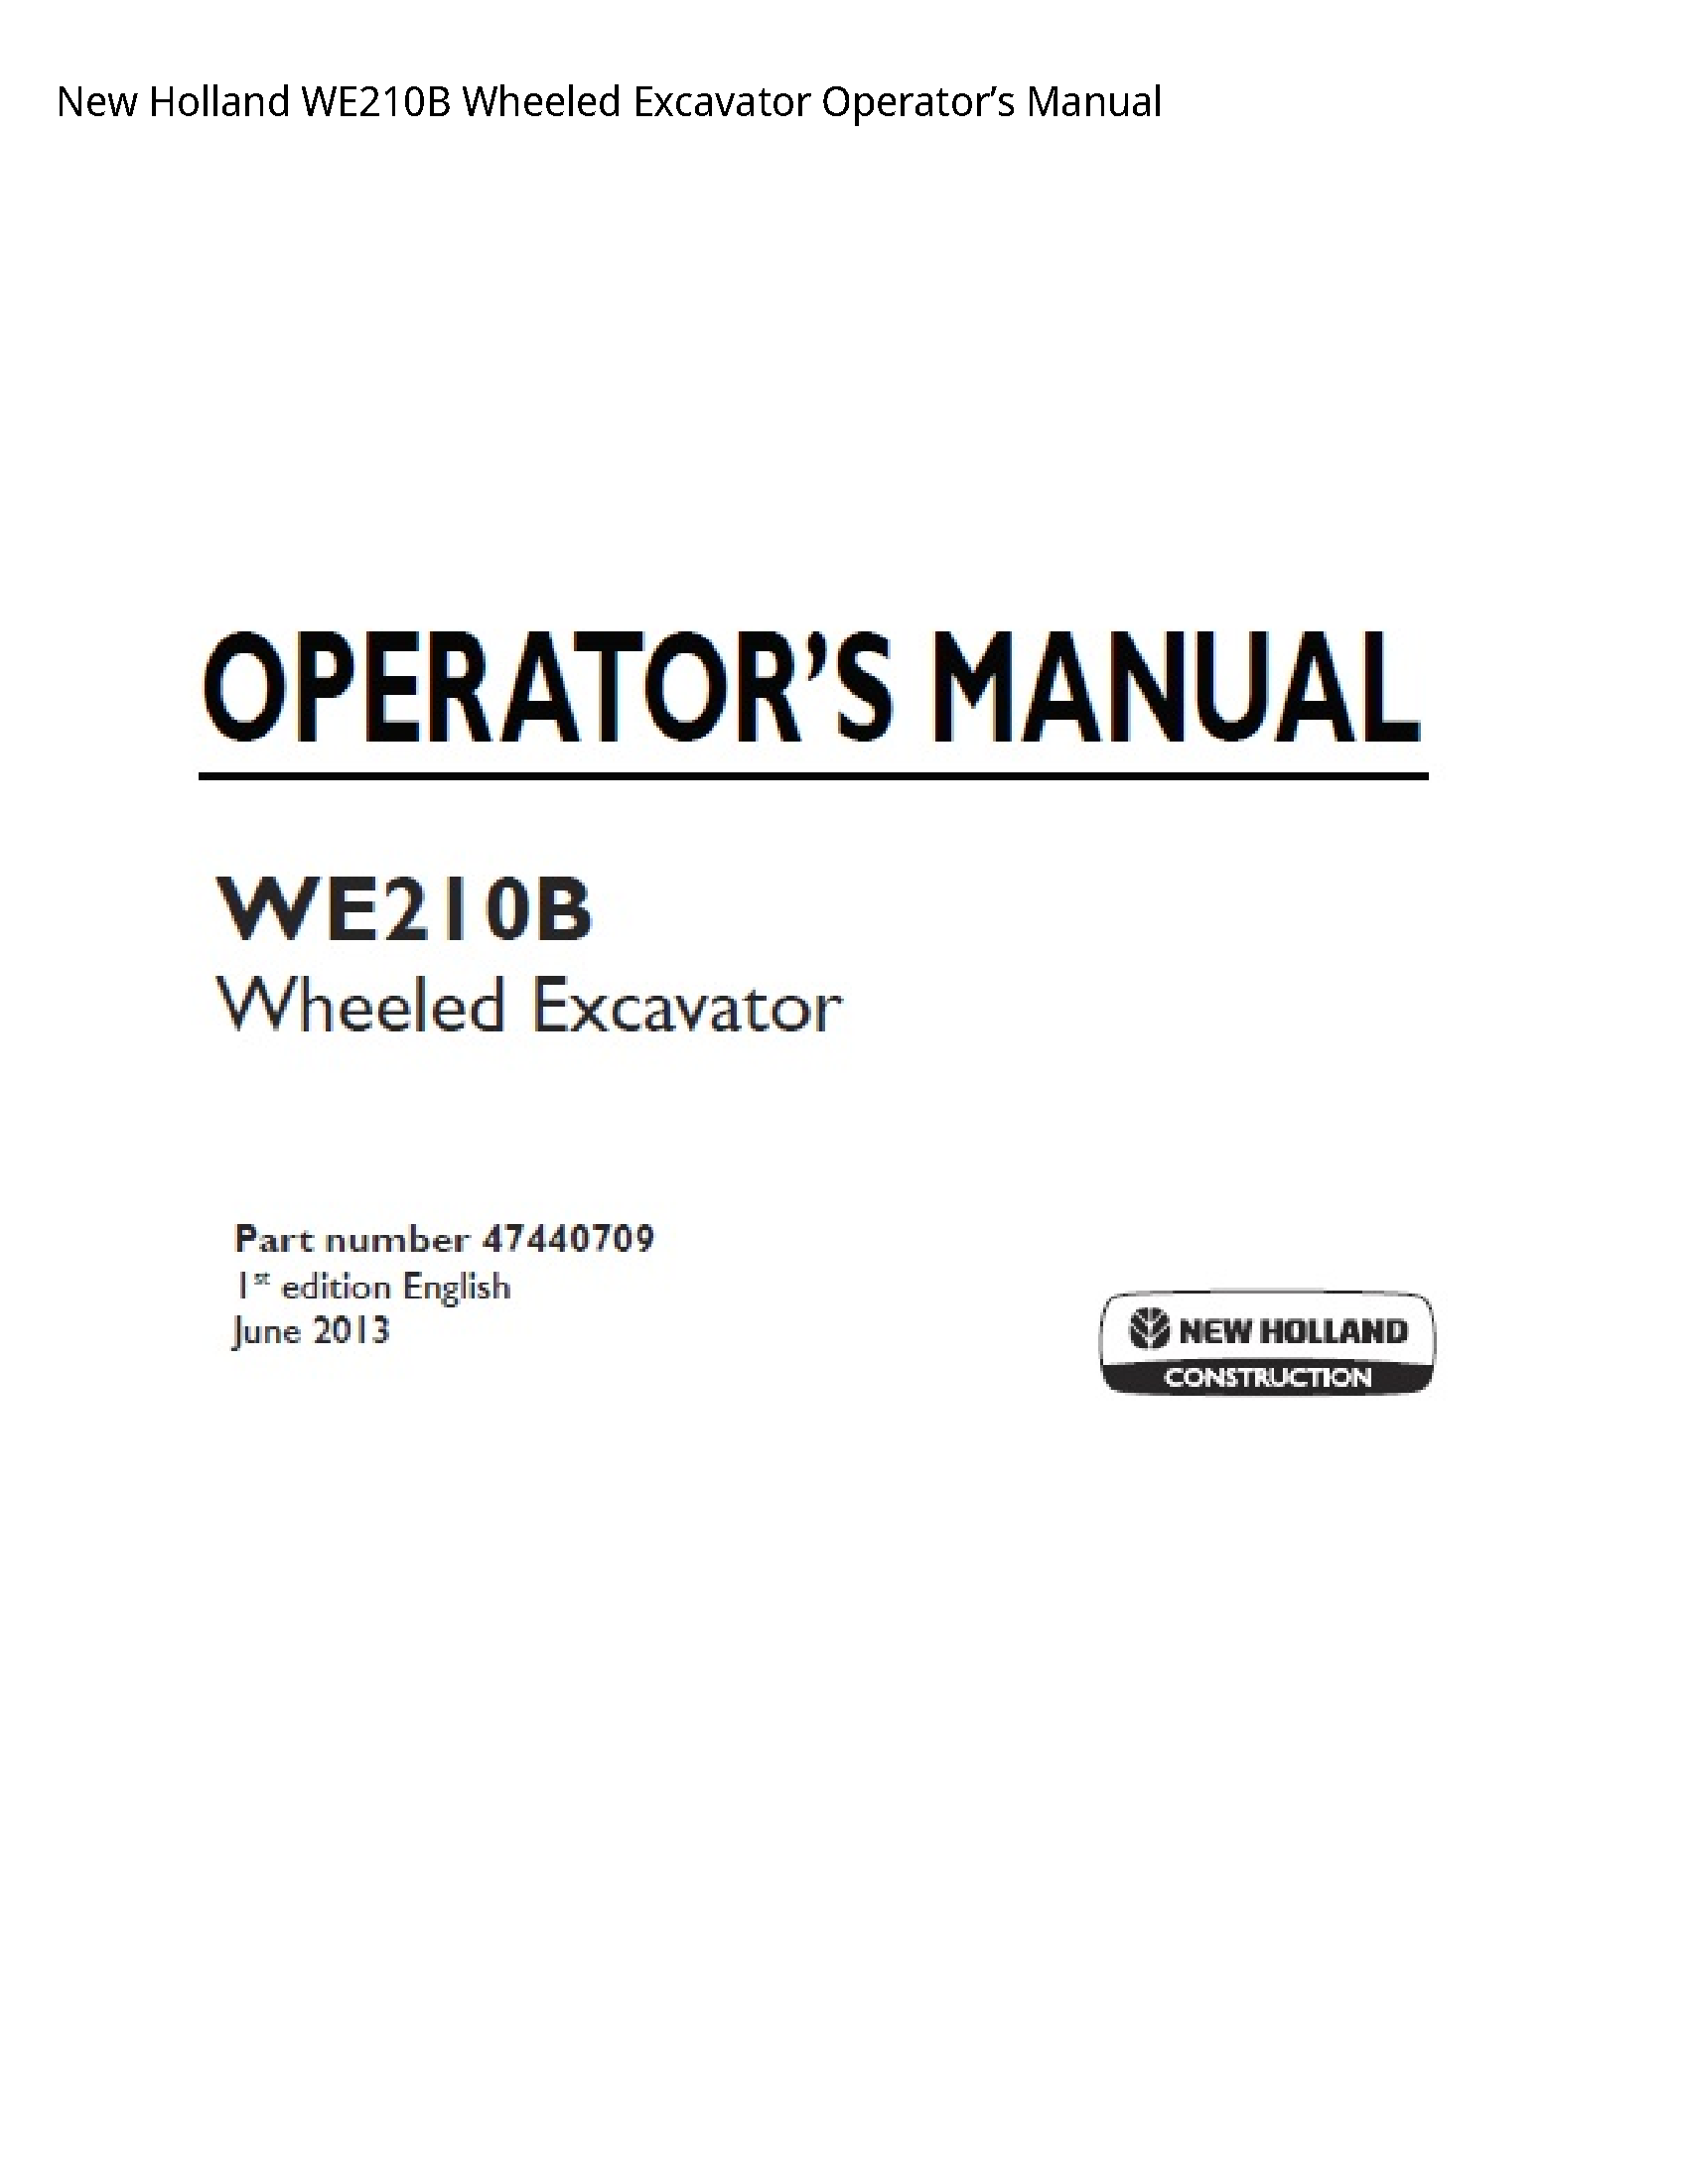 New Holland WE210B Wheeled Excavator Operator’s manual